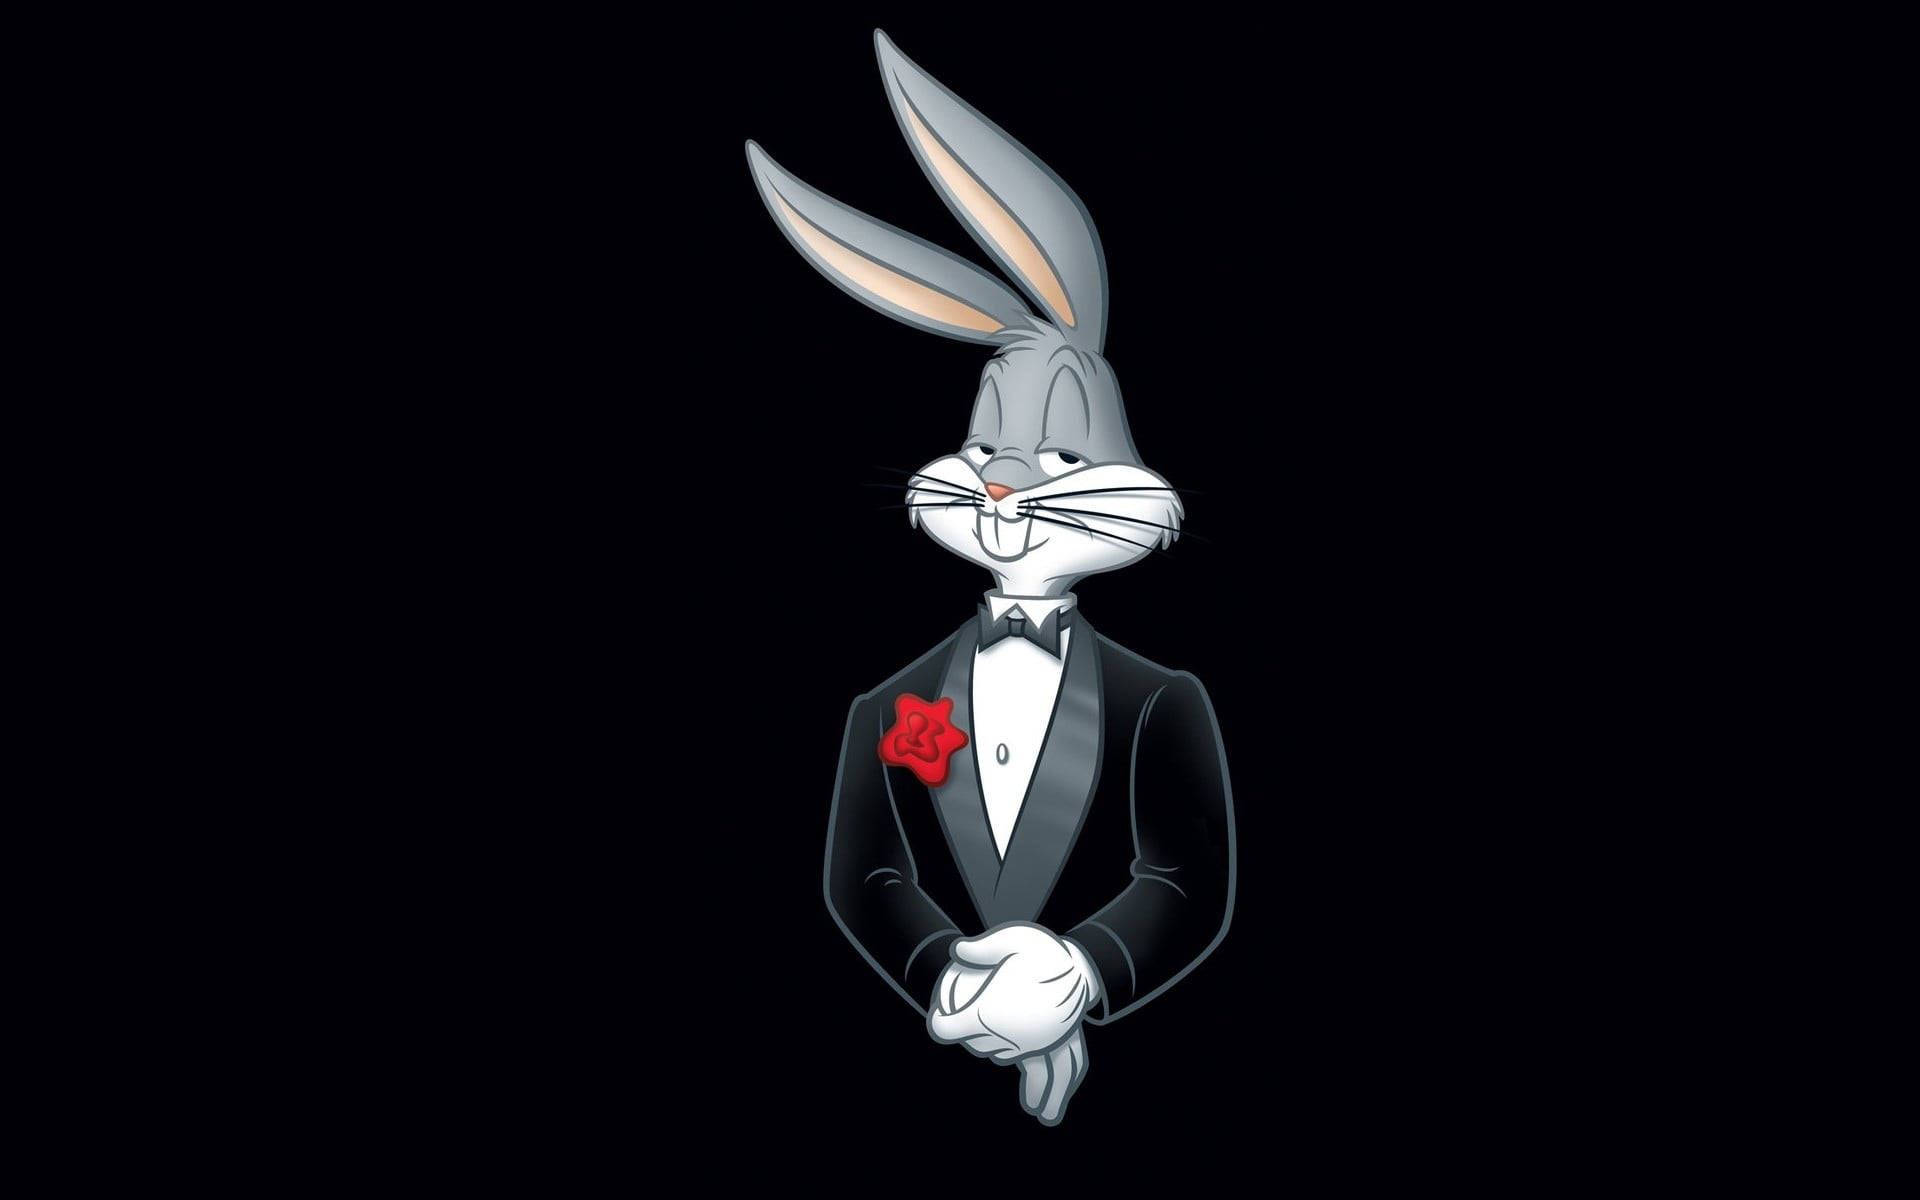 Looney Tunes Bugs Bunny In Suit